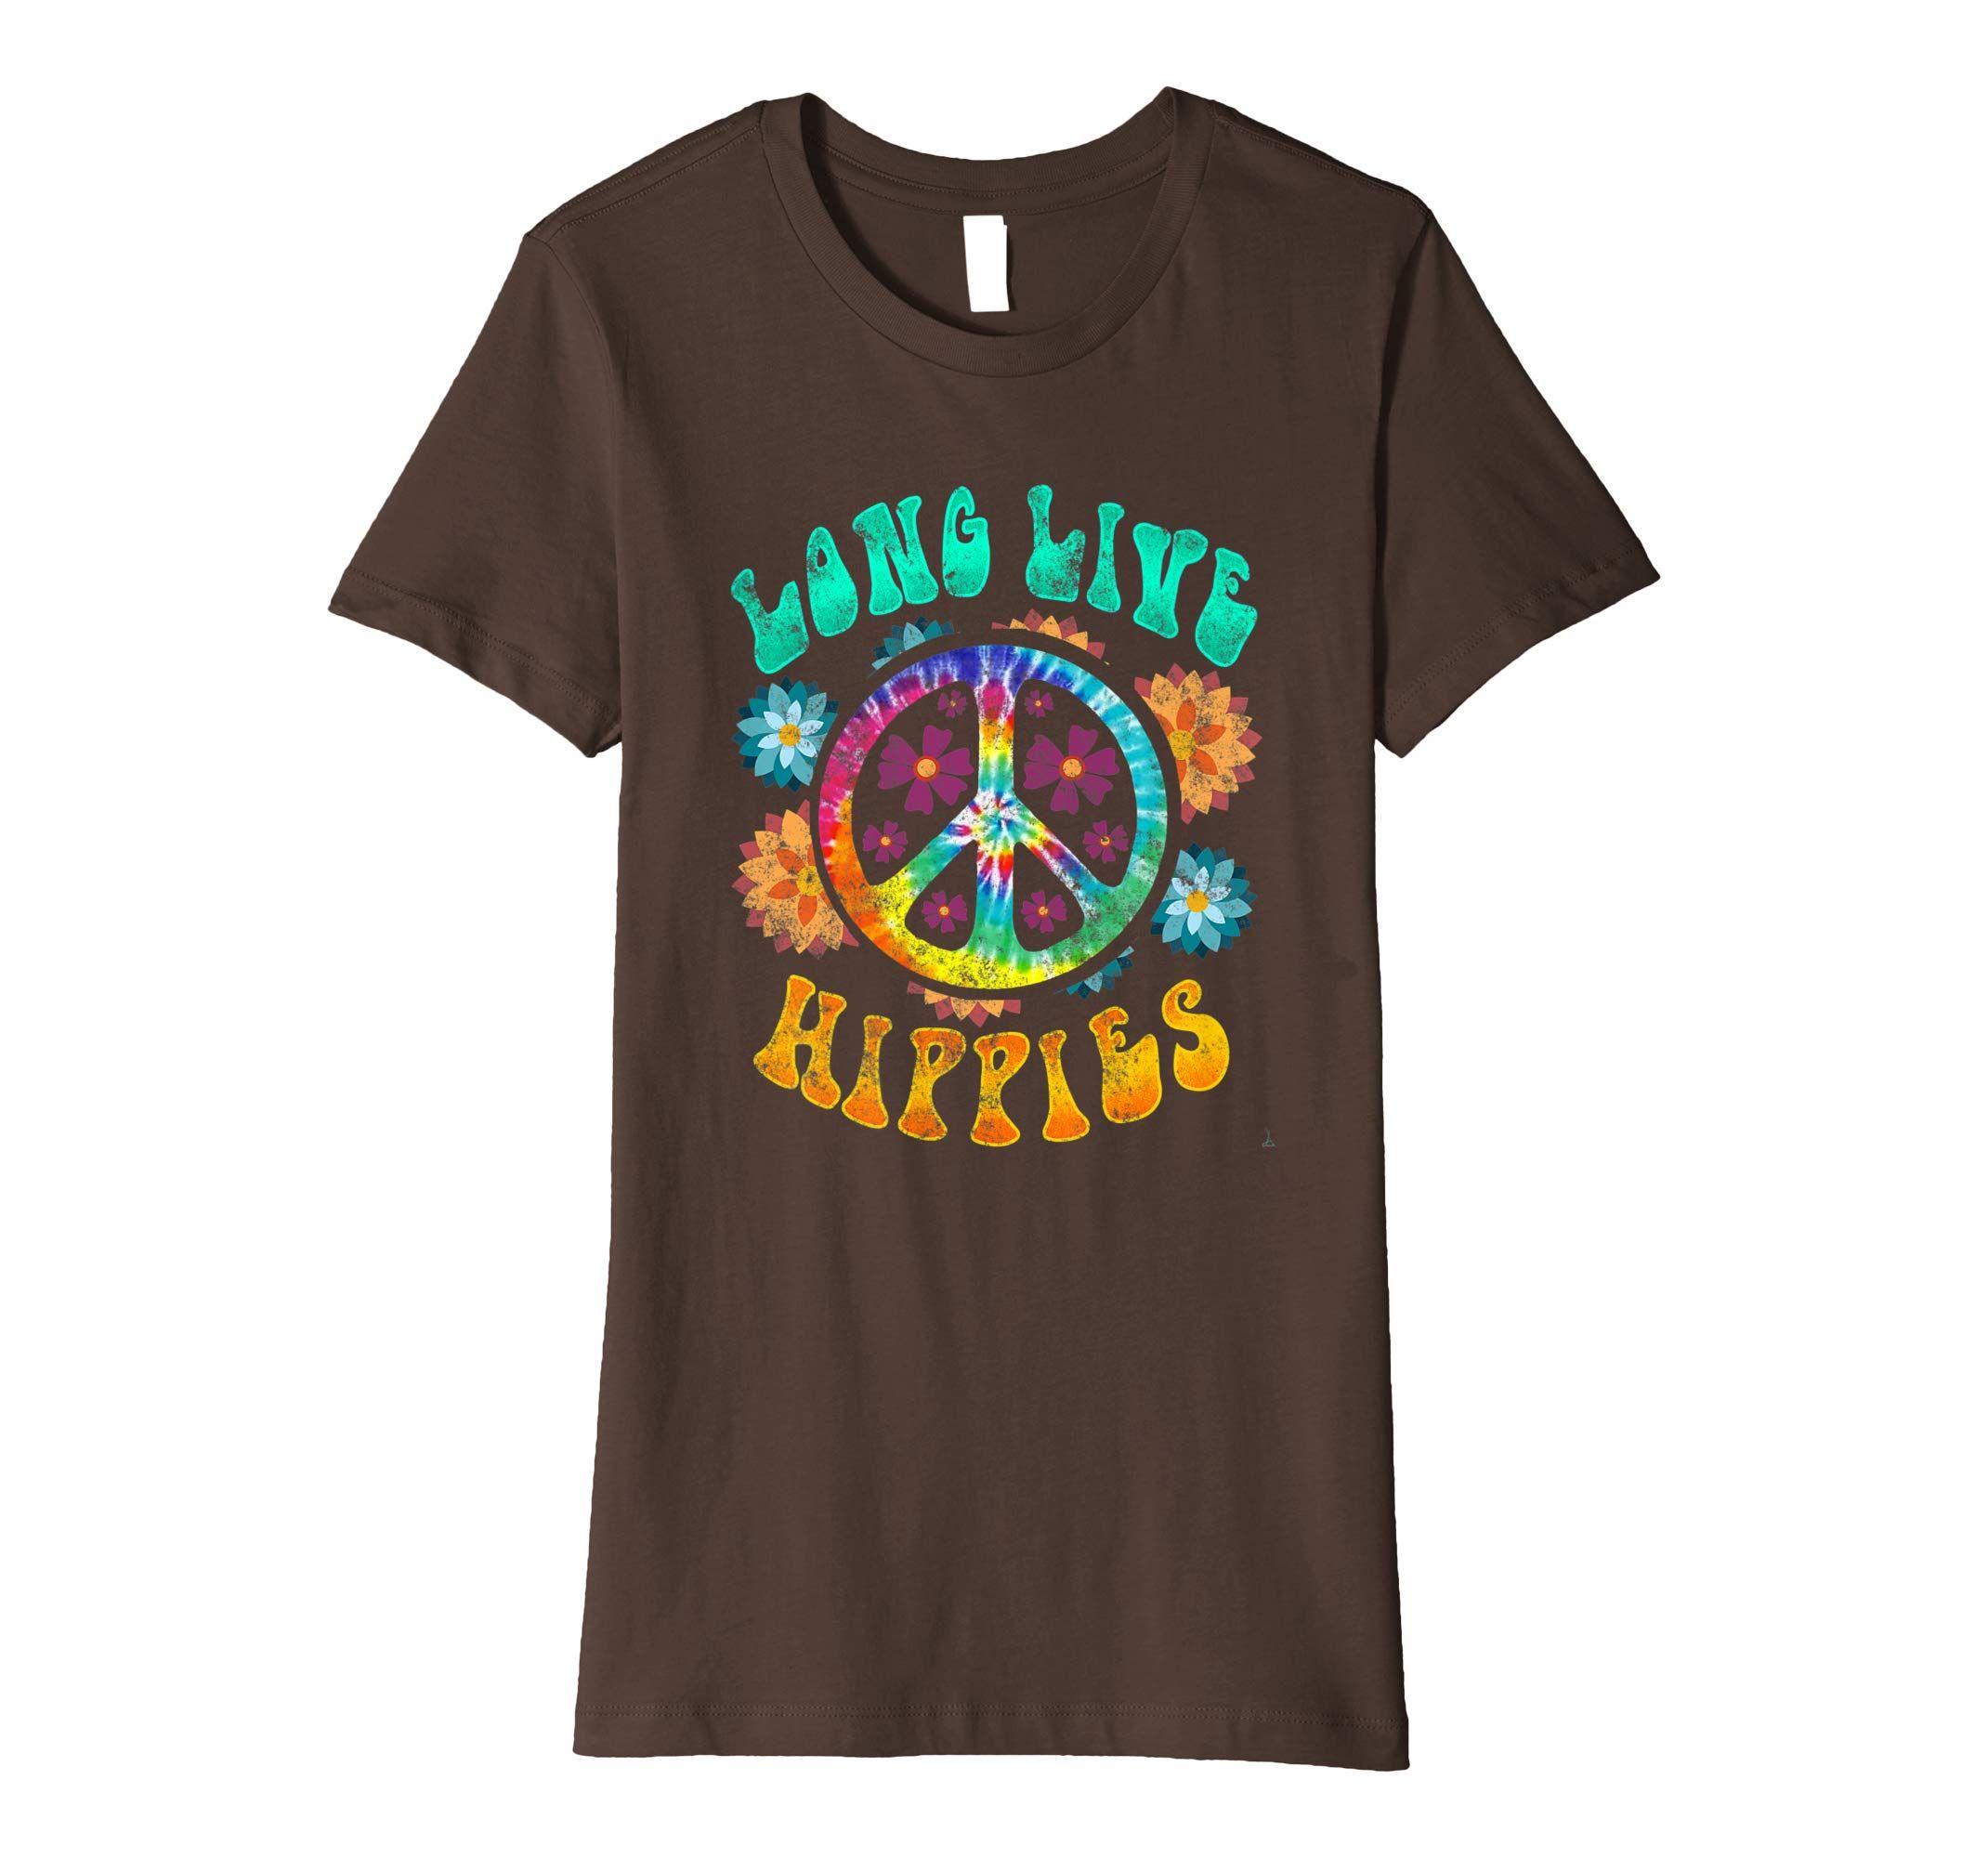 Hippie Cool Logo - Amazon.com: Long Live Hippies Peace Sign Symbol Hippie Cool Tie Dye ...